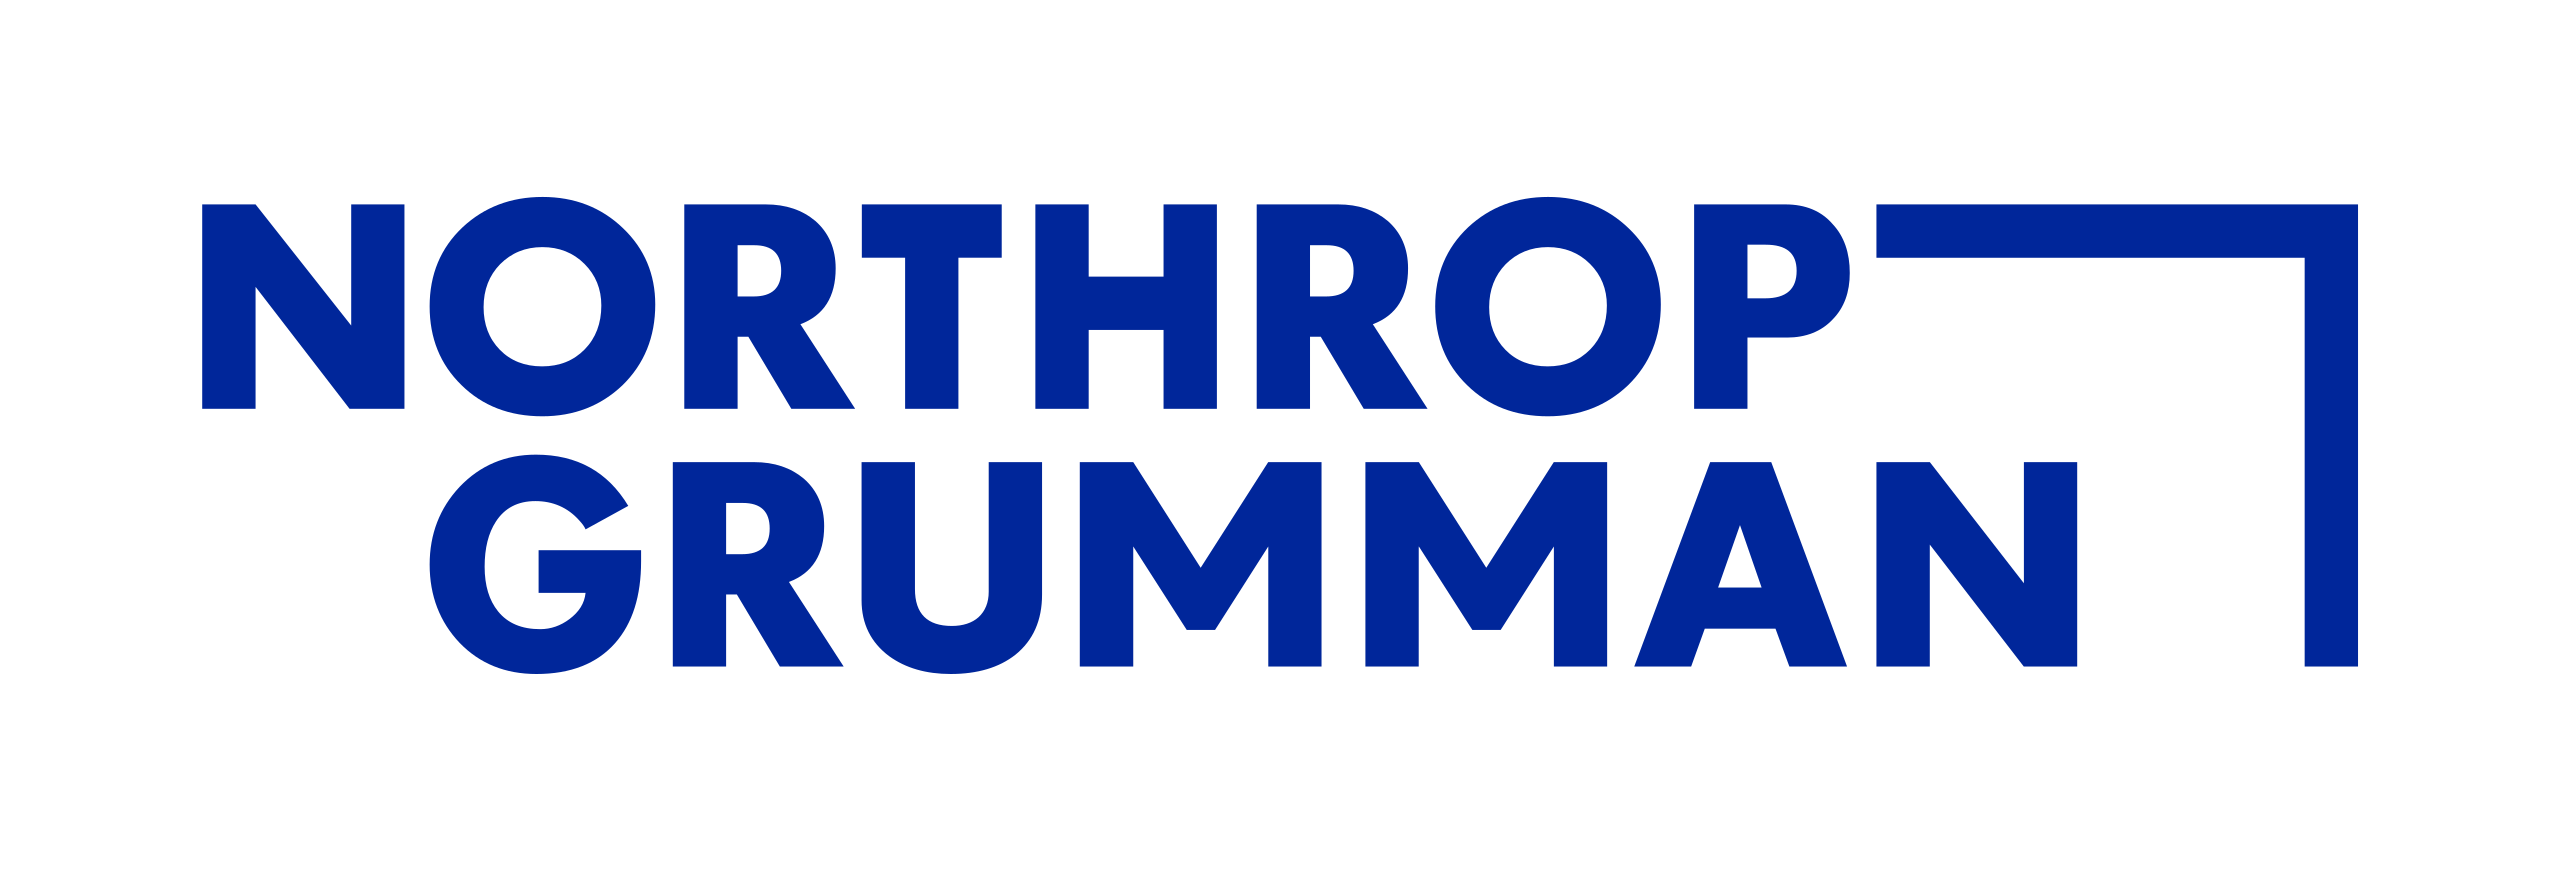 Northrop Grumman Corp. logo